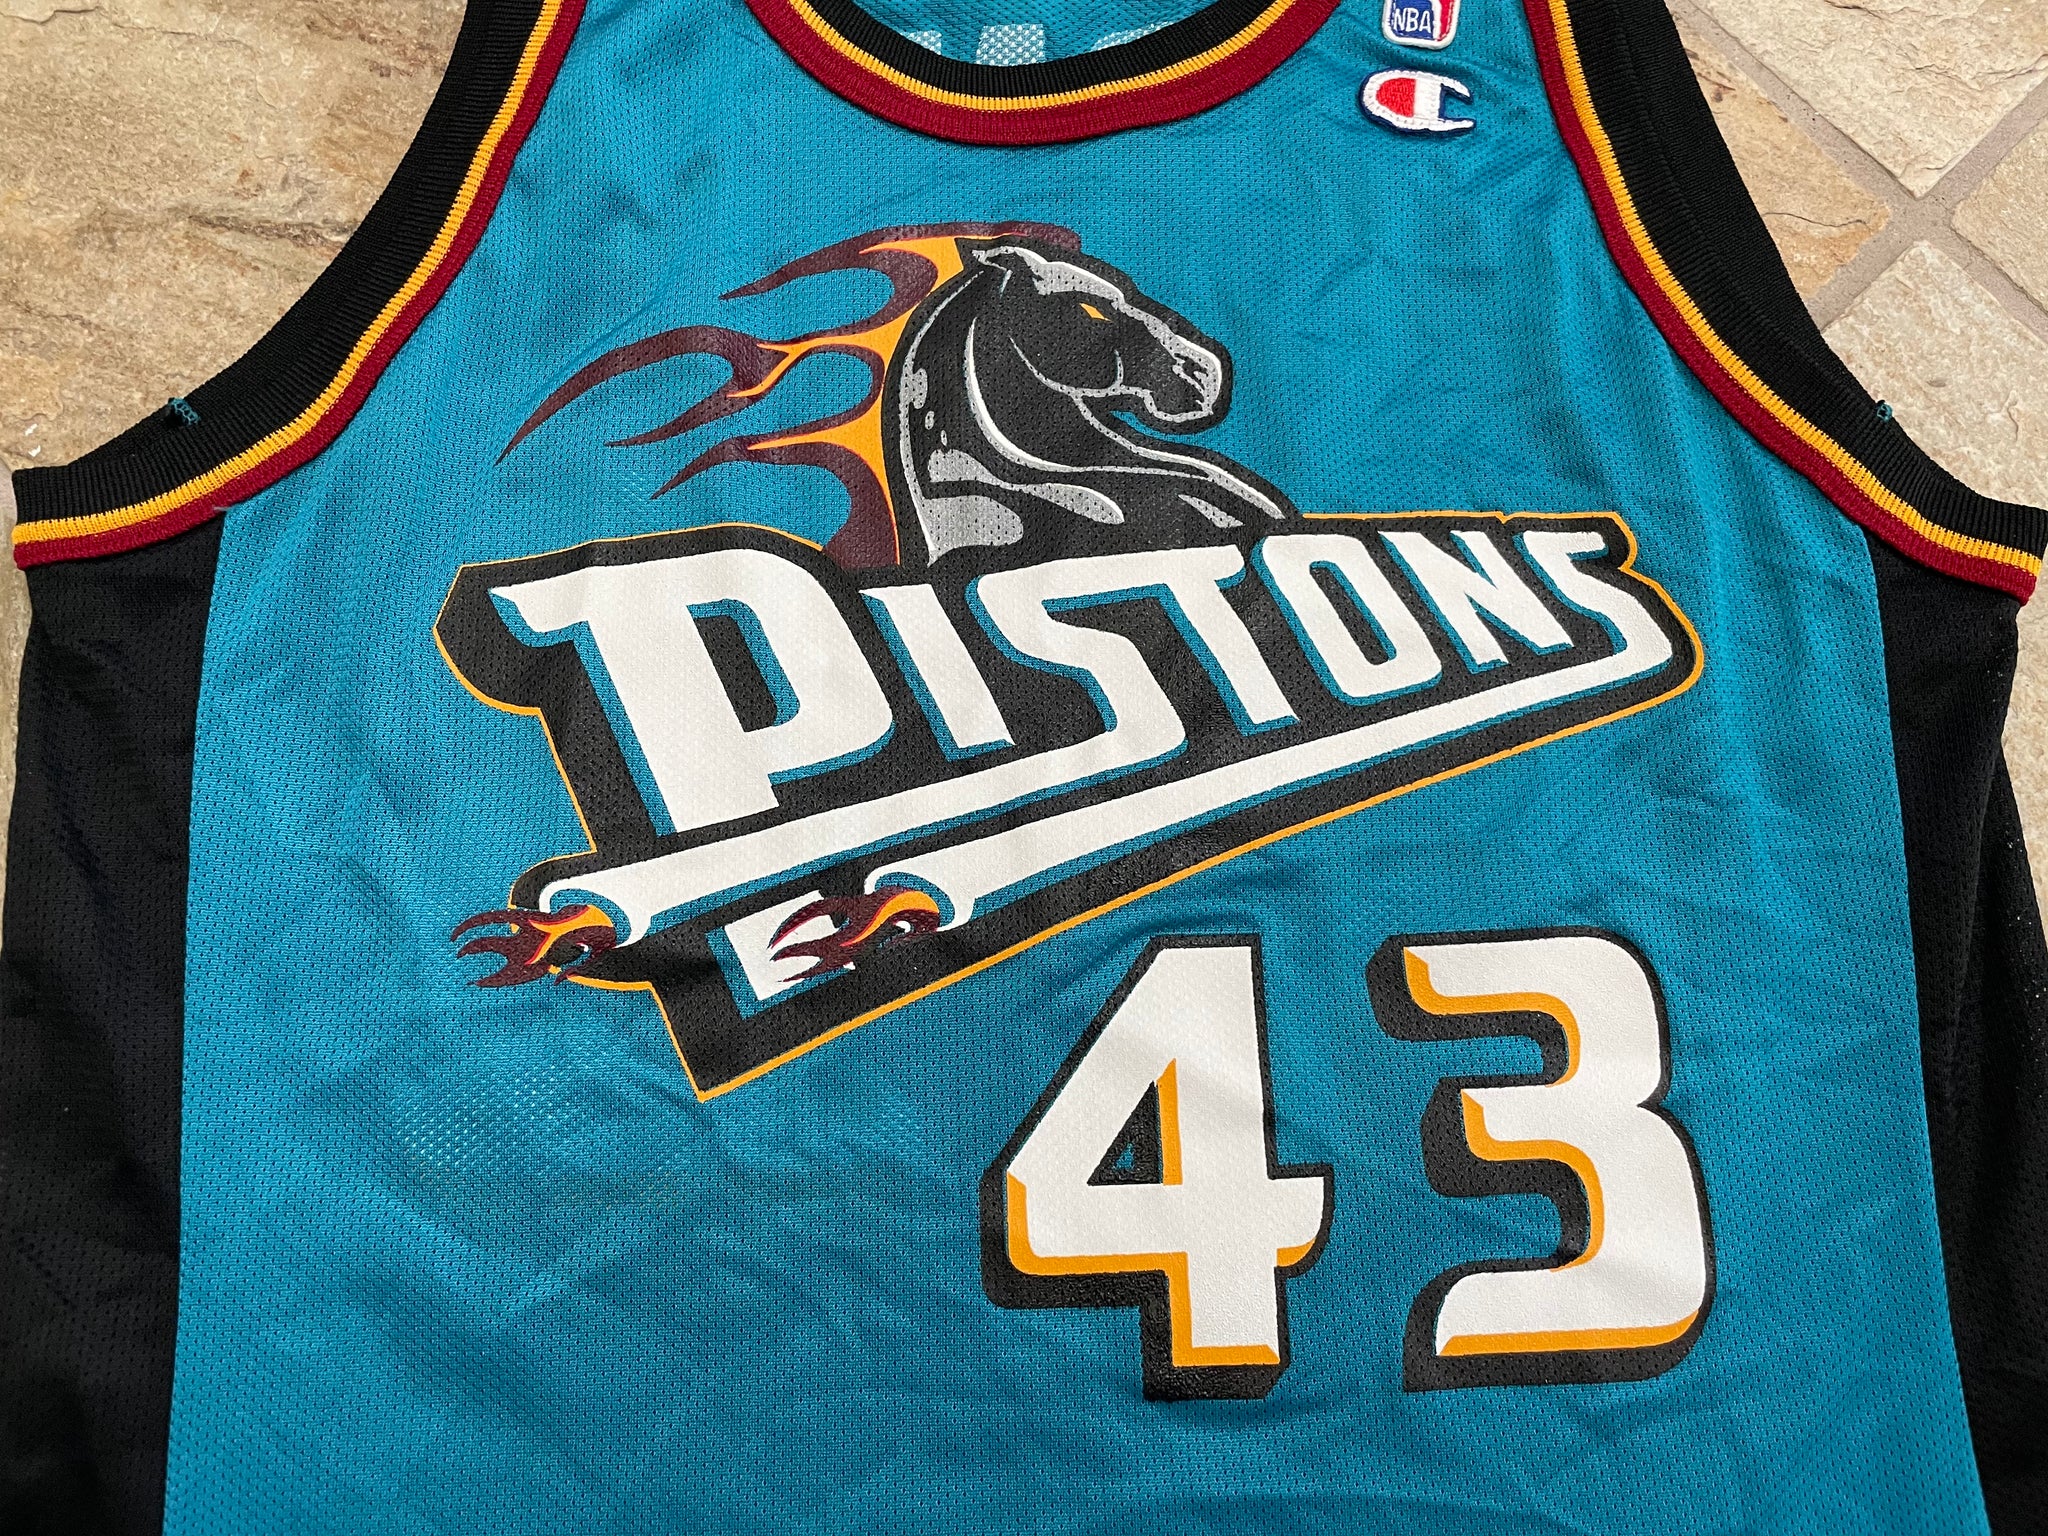 Grant Hill Pistons 90's Jersey Detroit NBA Throwback Rare Horse Champion